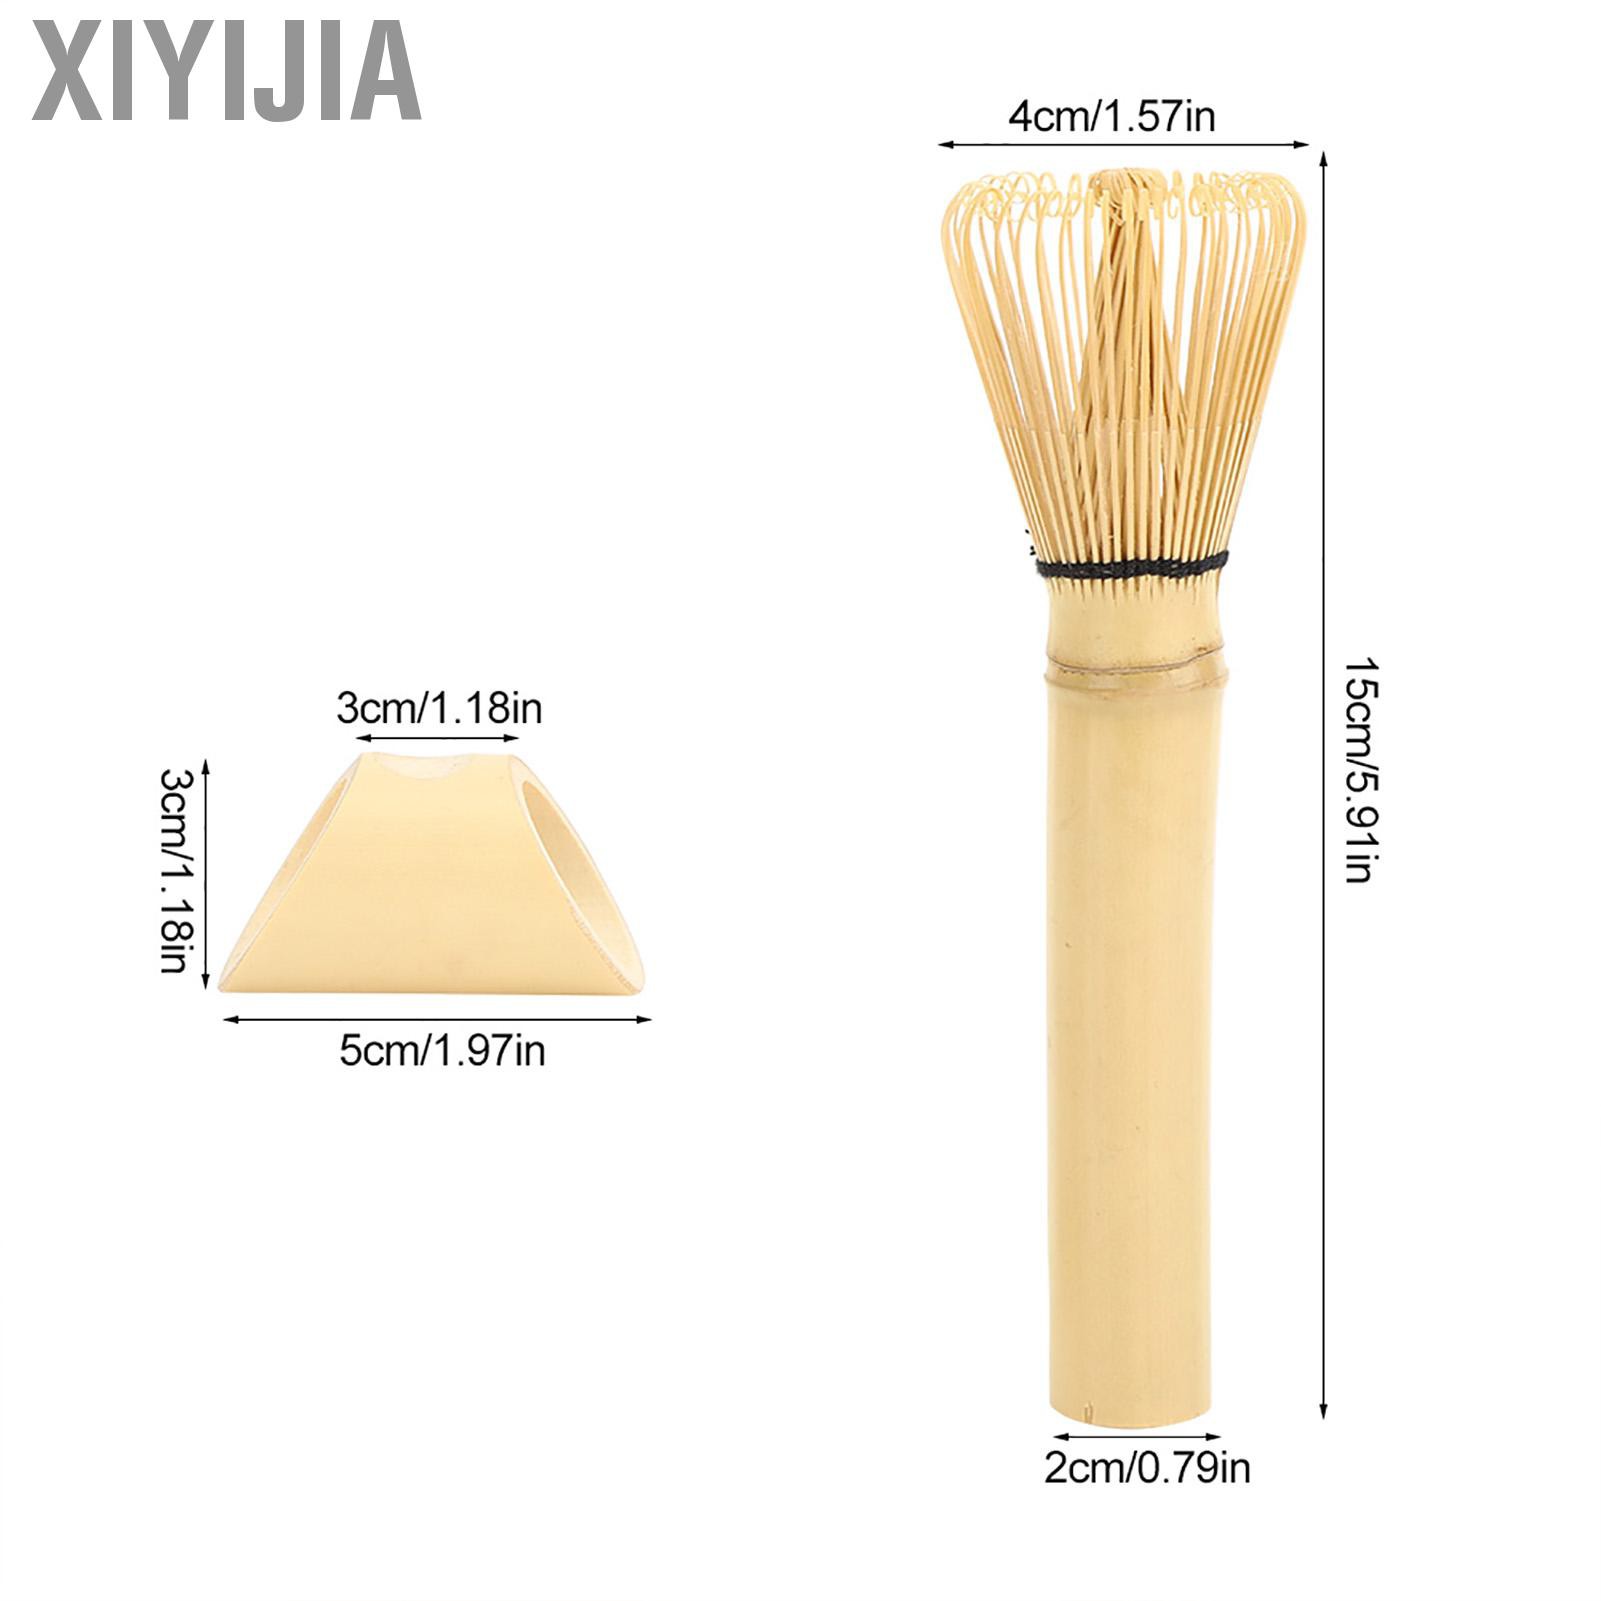 Xiyijia Natural Bamboo Chasen Matcha Green Tea Whisk Long Handle Powder Brush Tool